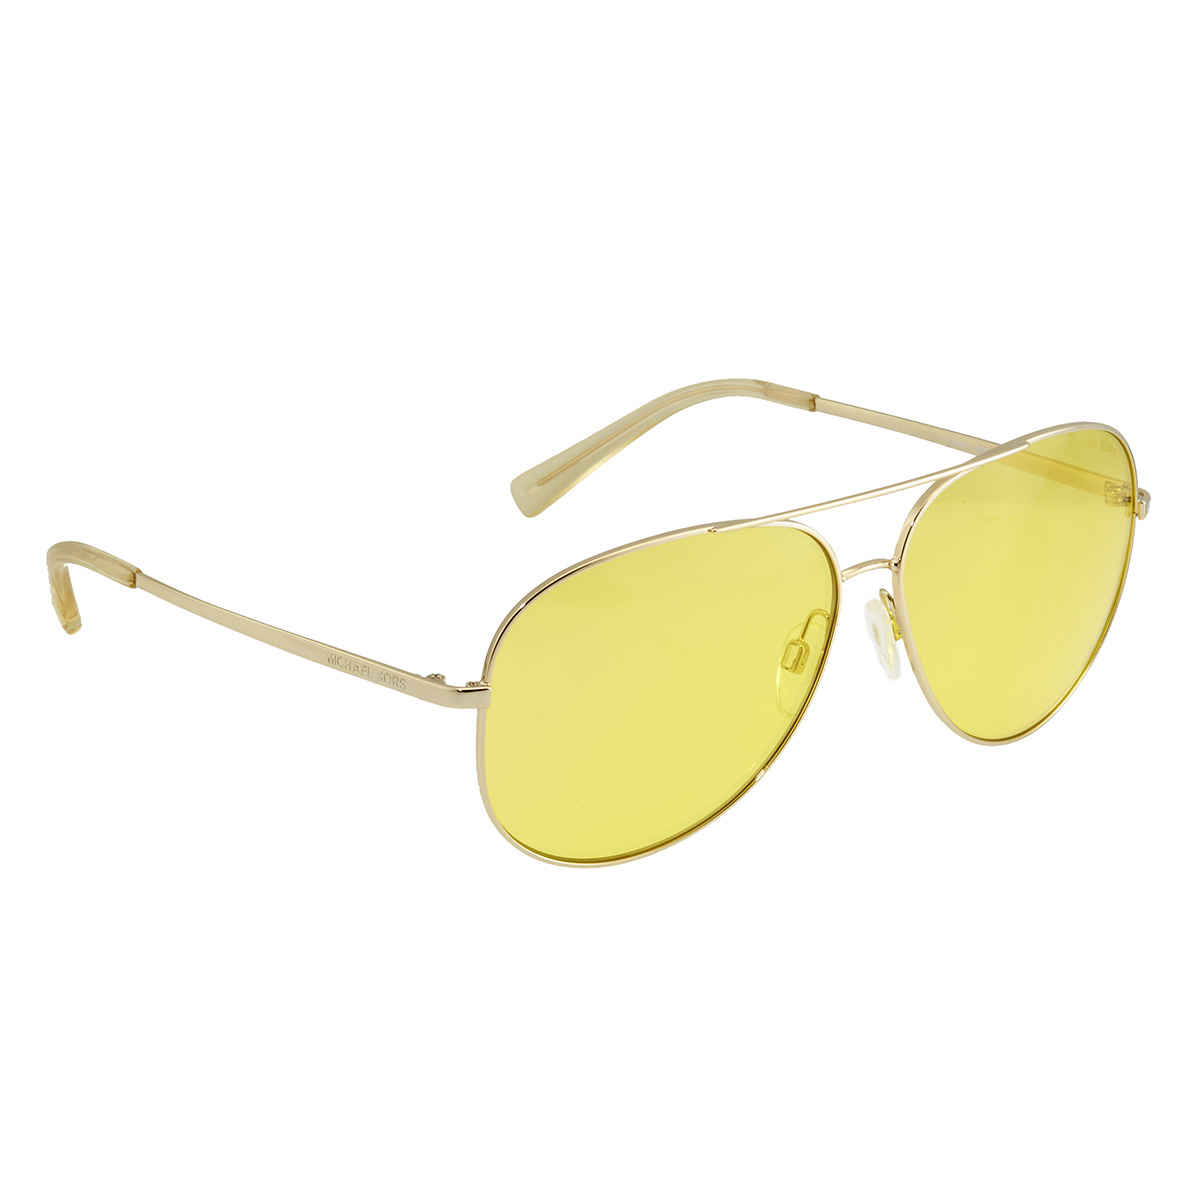 Michael Kors Kendall Golden Yellow Solid Pilot Ladies Sunglasses MK5016 101485 60, Women's Sunglasses - image 1 of 2